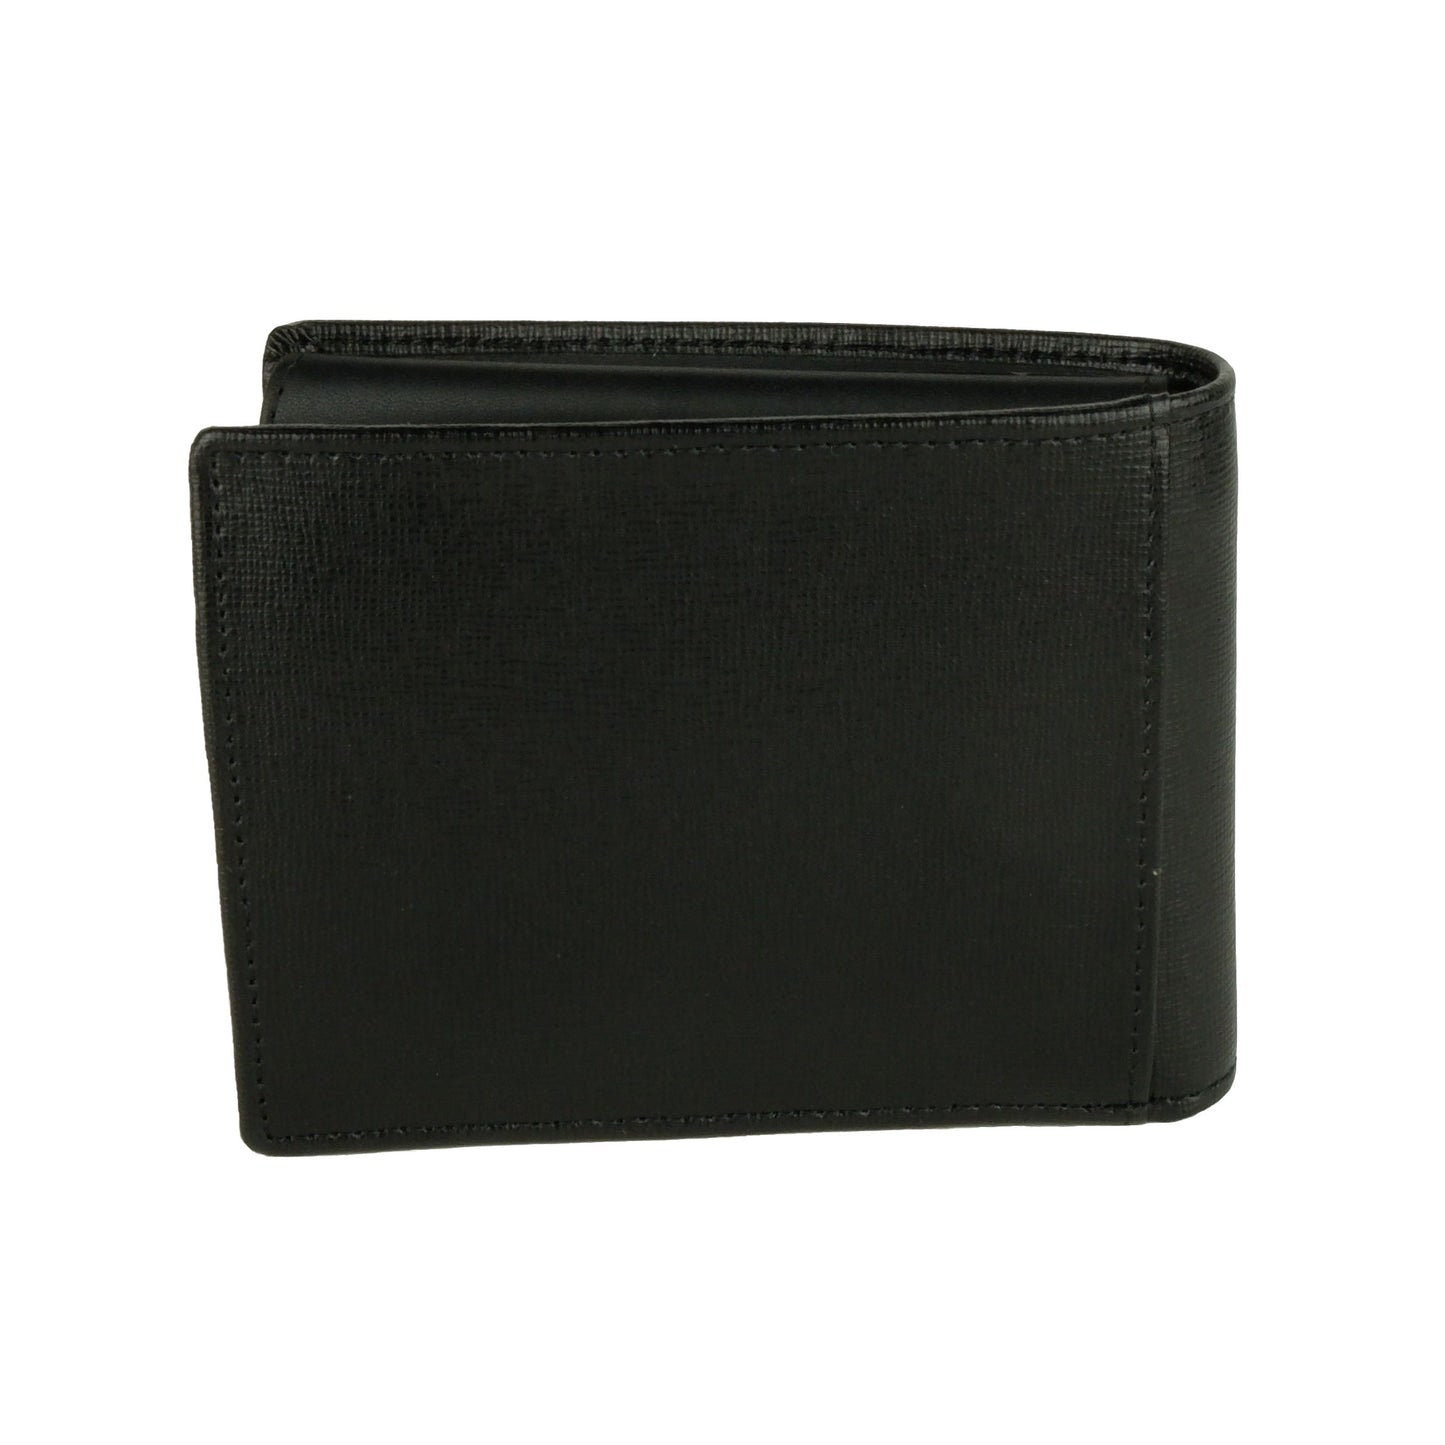 Nero Genuine Leather Wallet